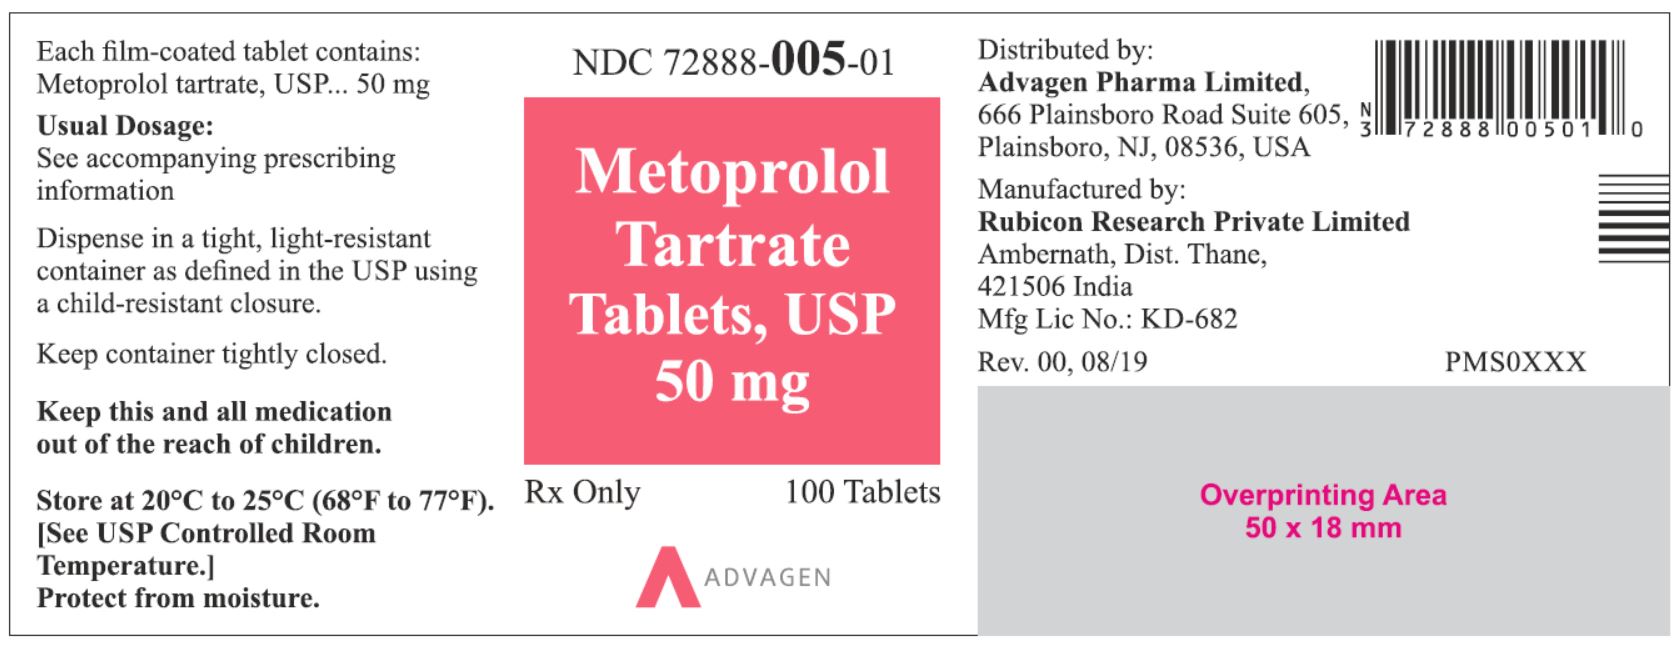 NDC 72888-005-01 - Metoprolol Tartrate Tablets, USP 50 mg - 100 Tablets